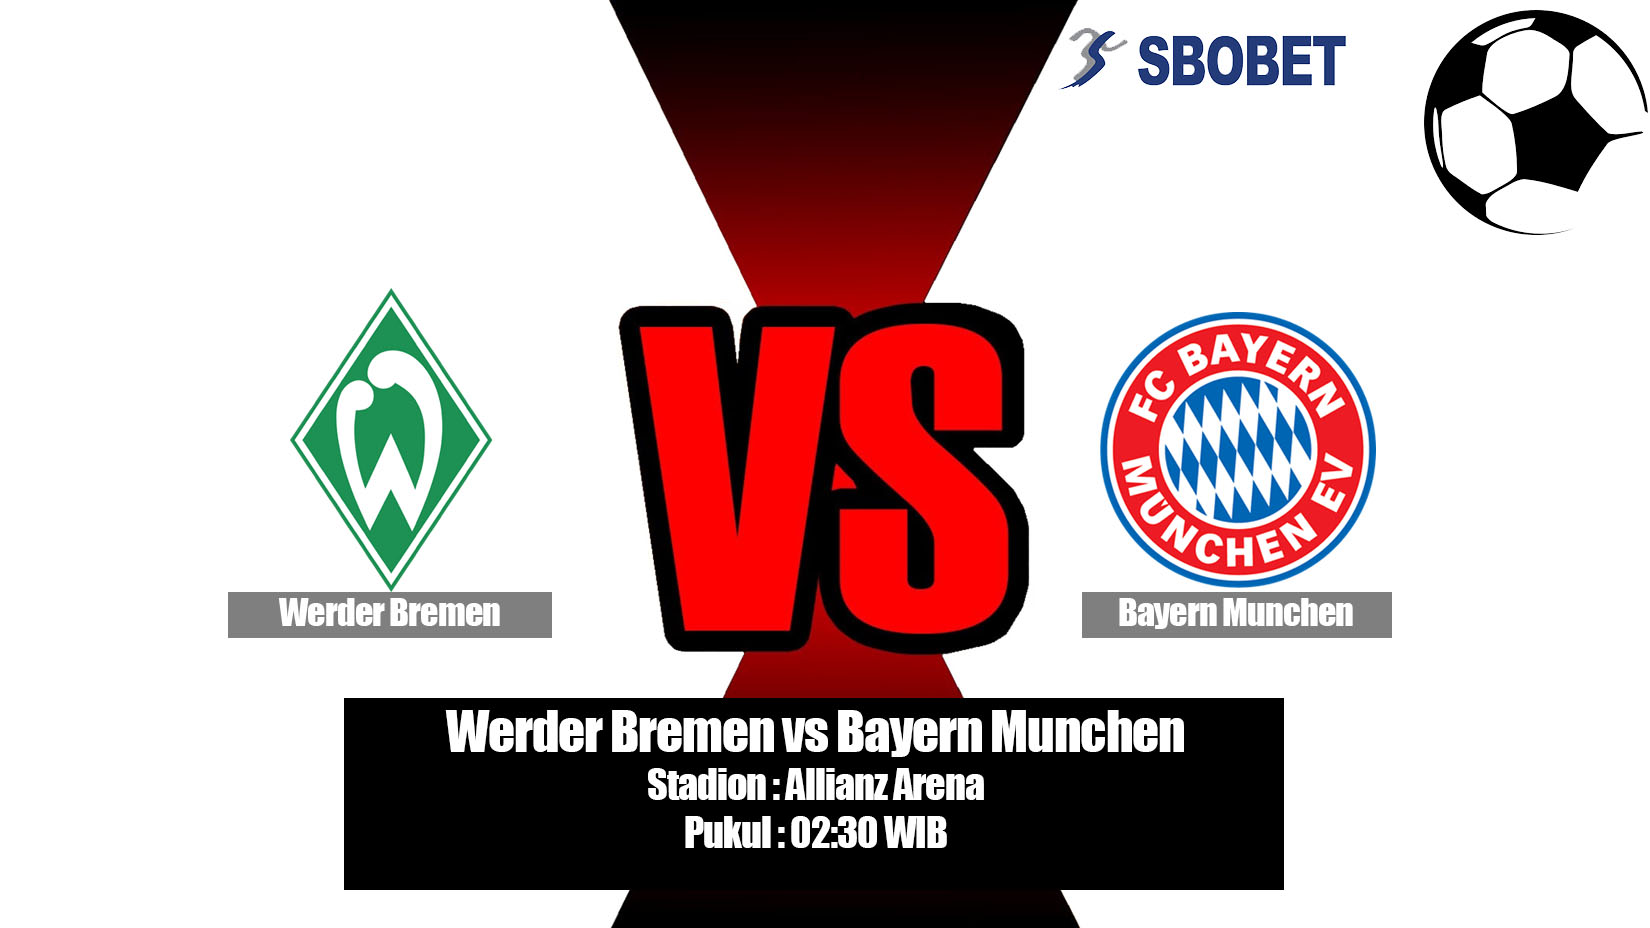 Prediksi Bola Werder Bremen vs Bayern Munchen 25 April 2019